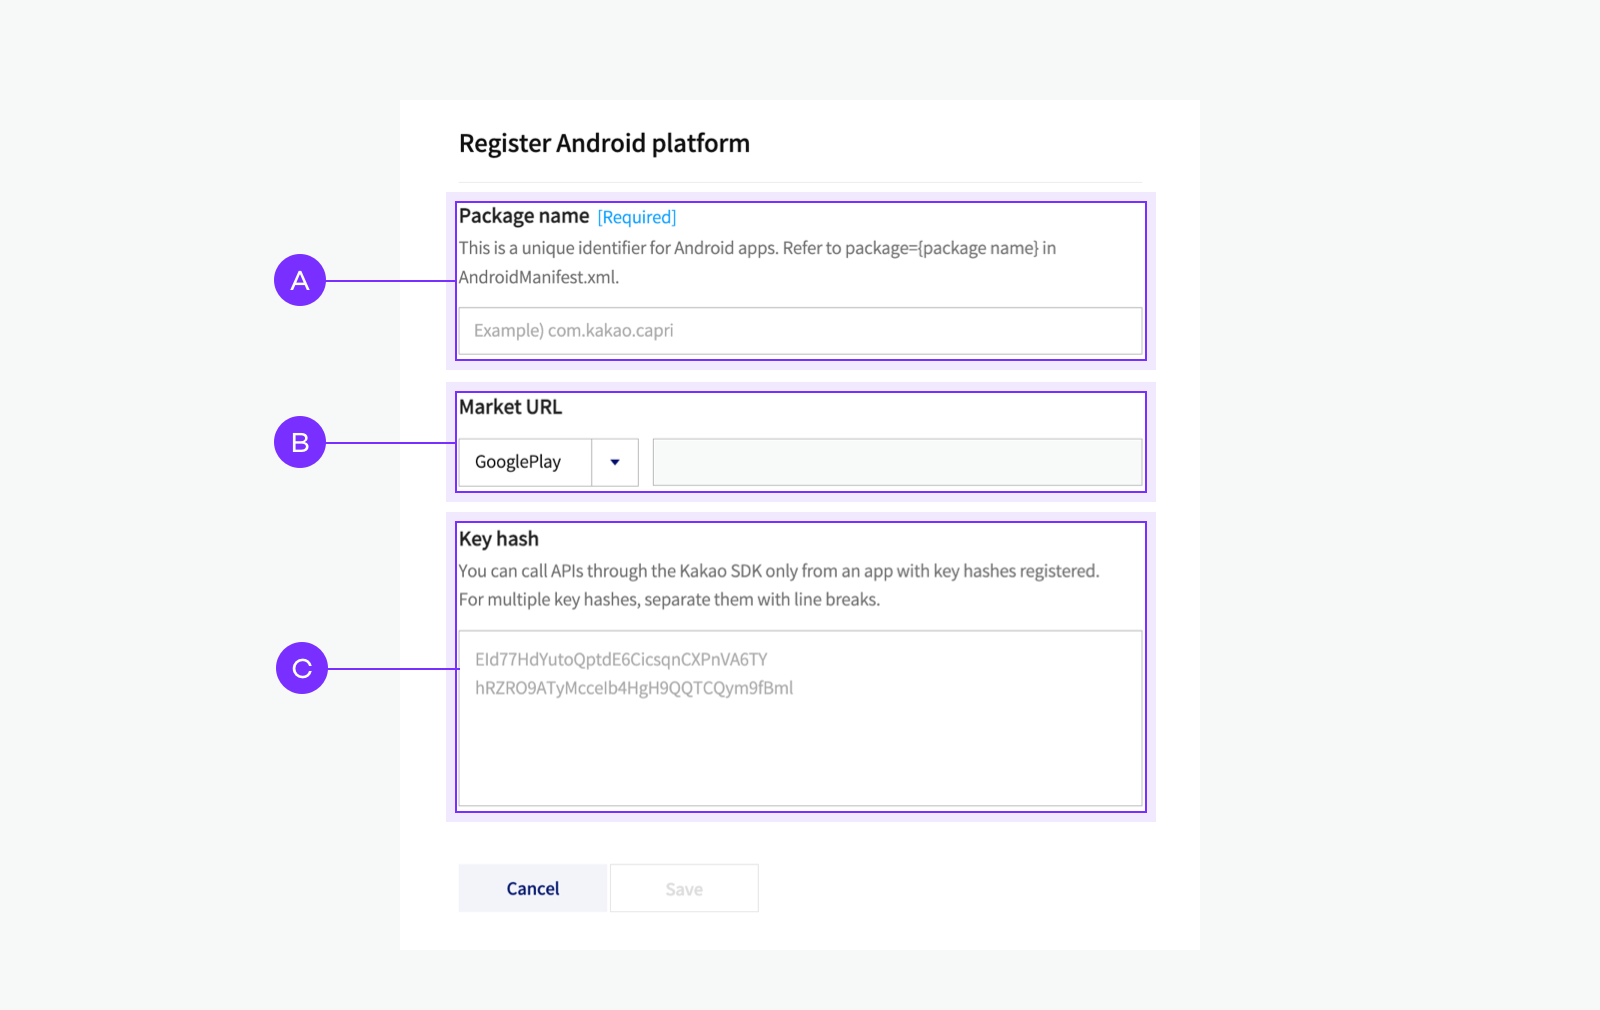 Dialog box for registering Android platform